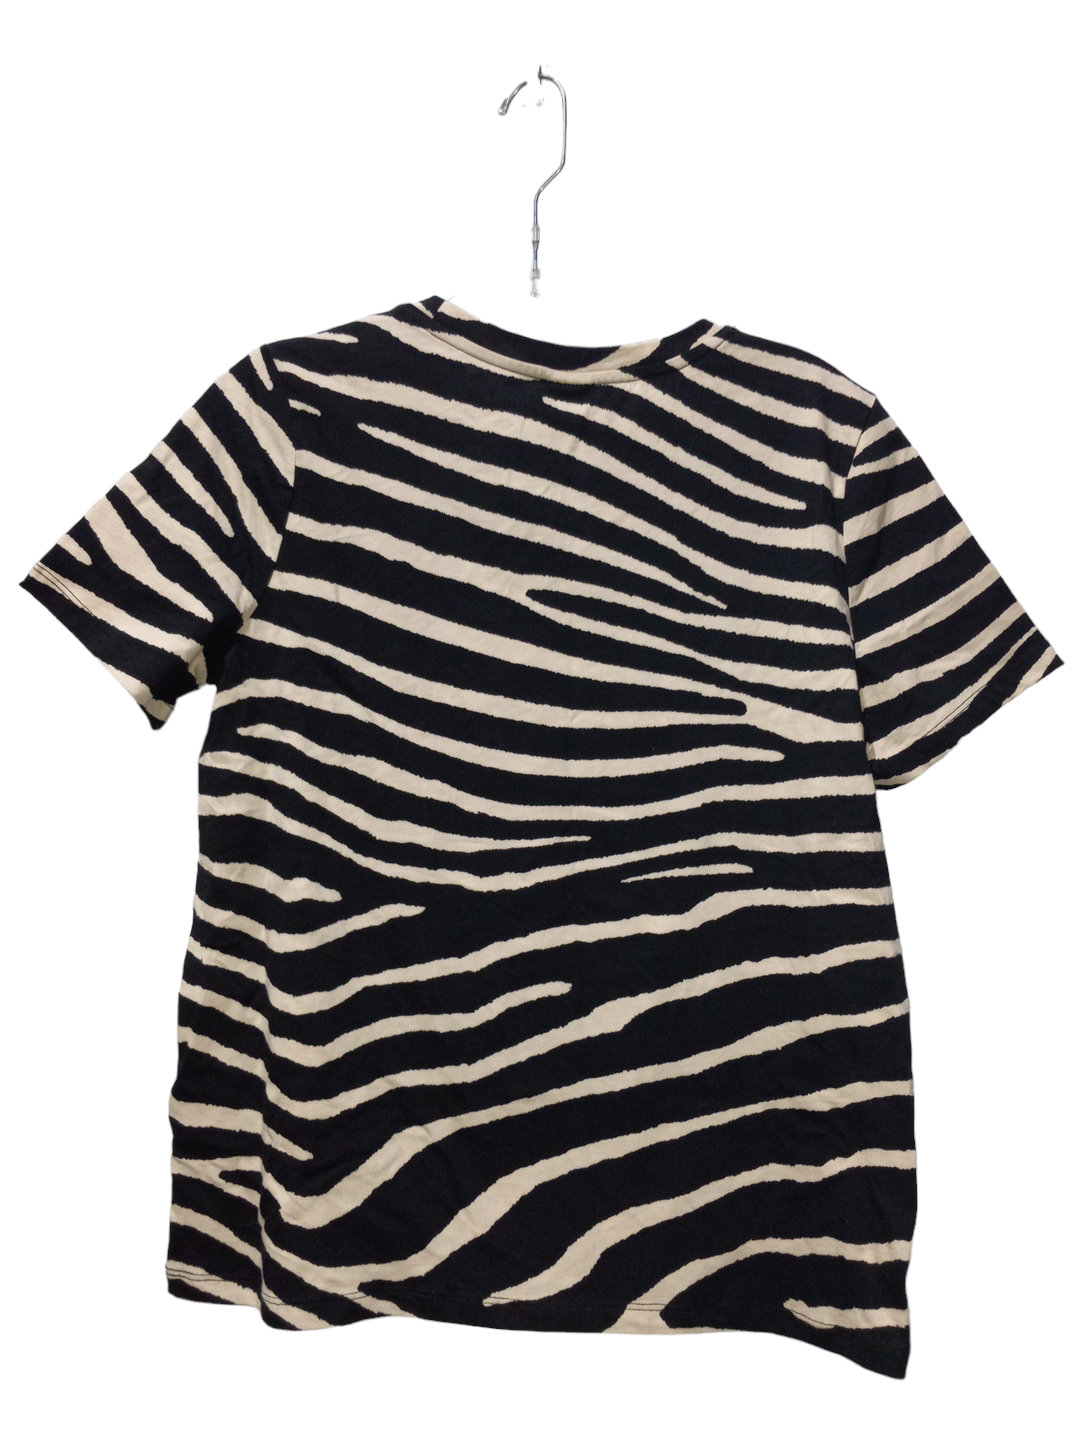 Zebra Print Top Short Sleeve H&m, Size S